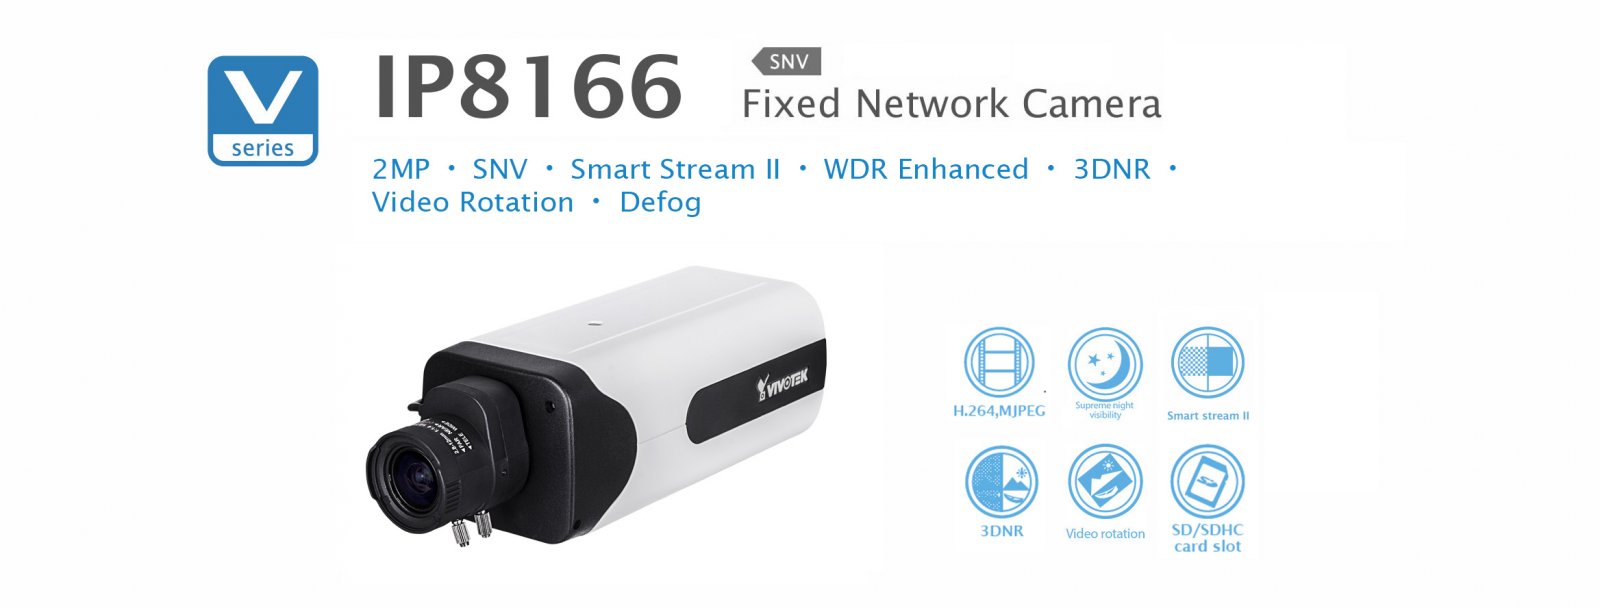 IP8166. Vivotek Fixed Network Camera